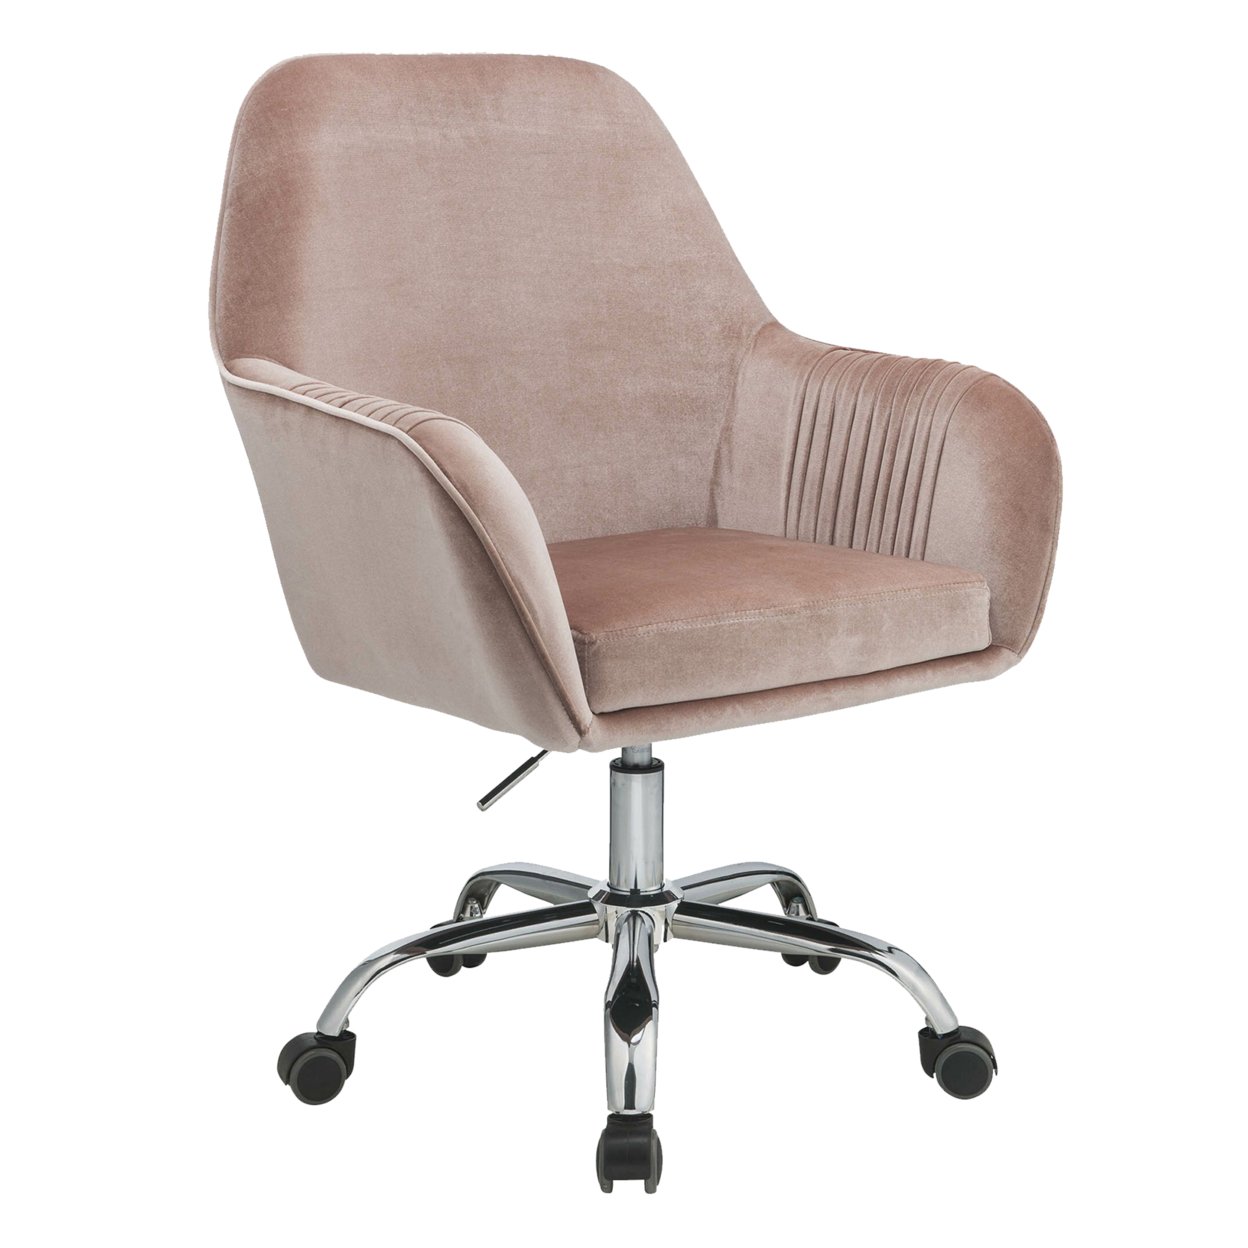 Adjustable Velvet Upholstered Swivel Office Chair With Slopped Armrests, Pink And Silver- Saltoro Sherpi